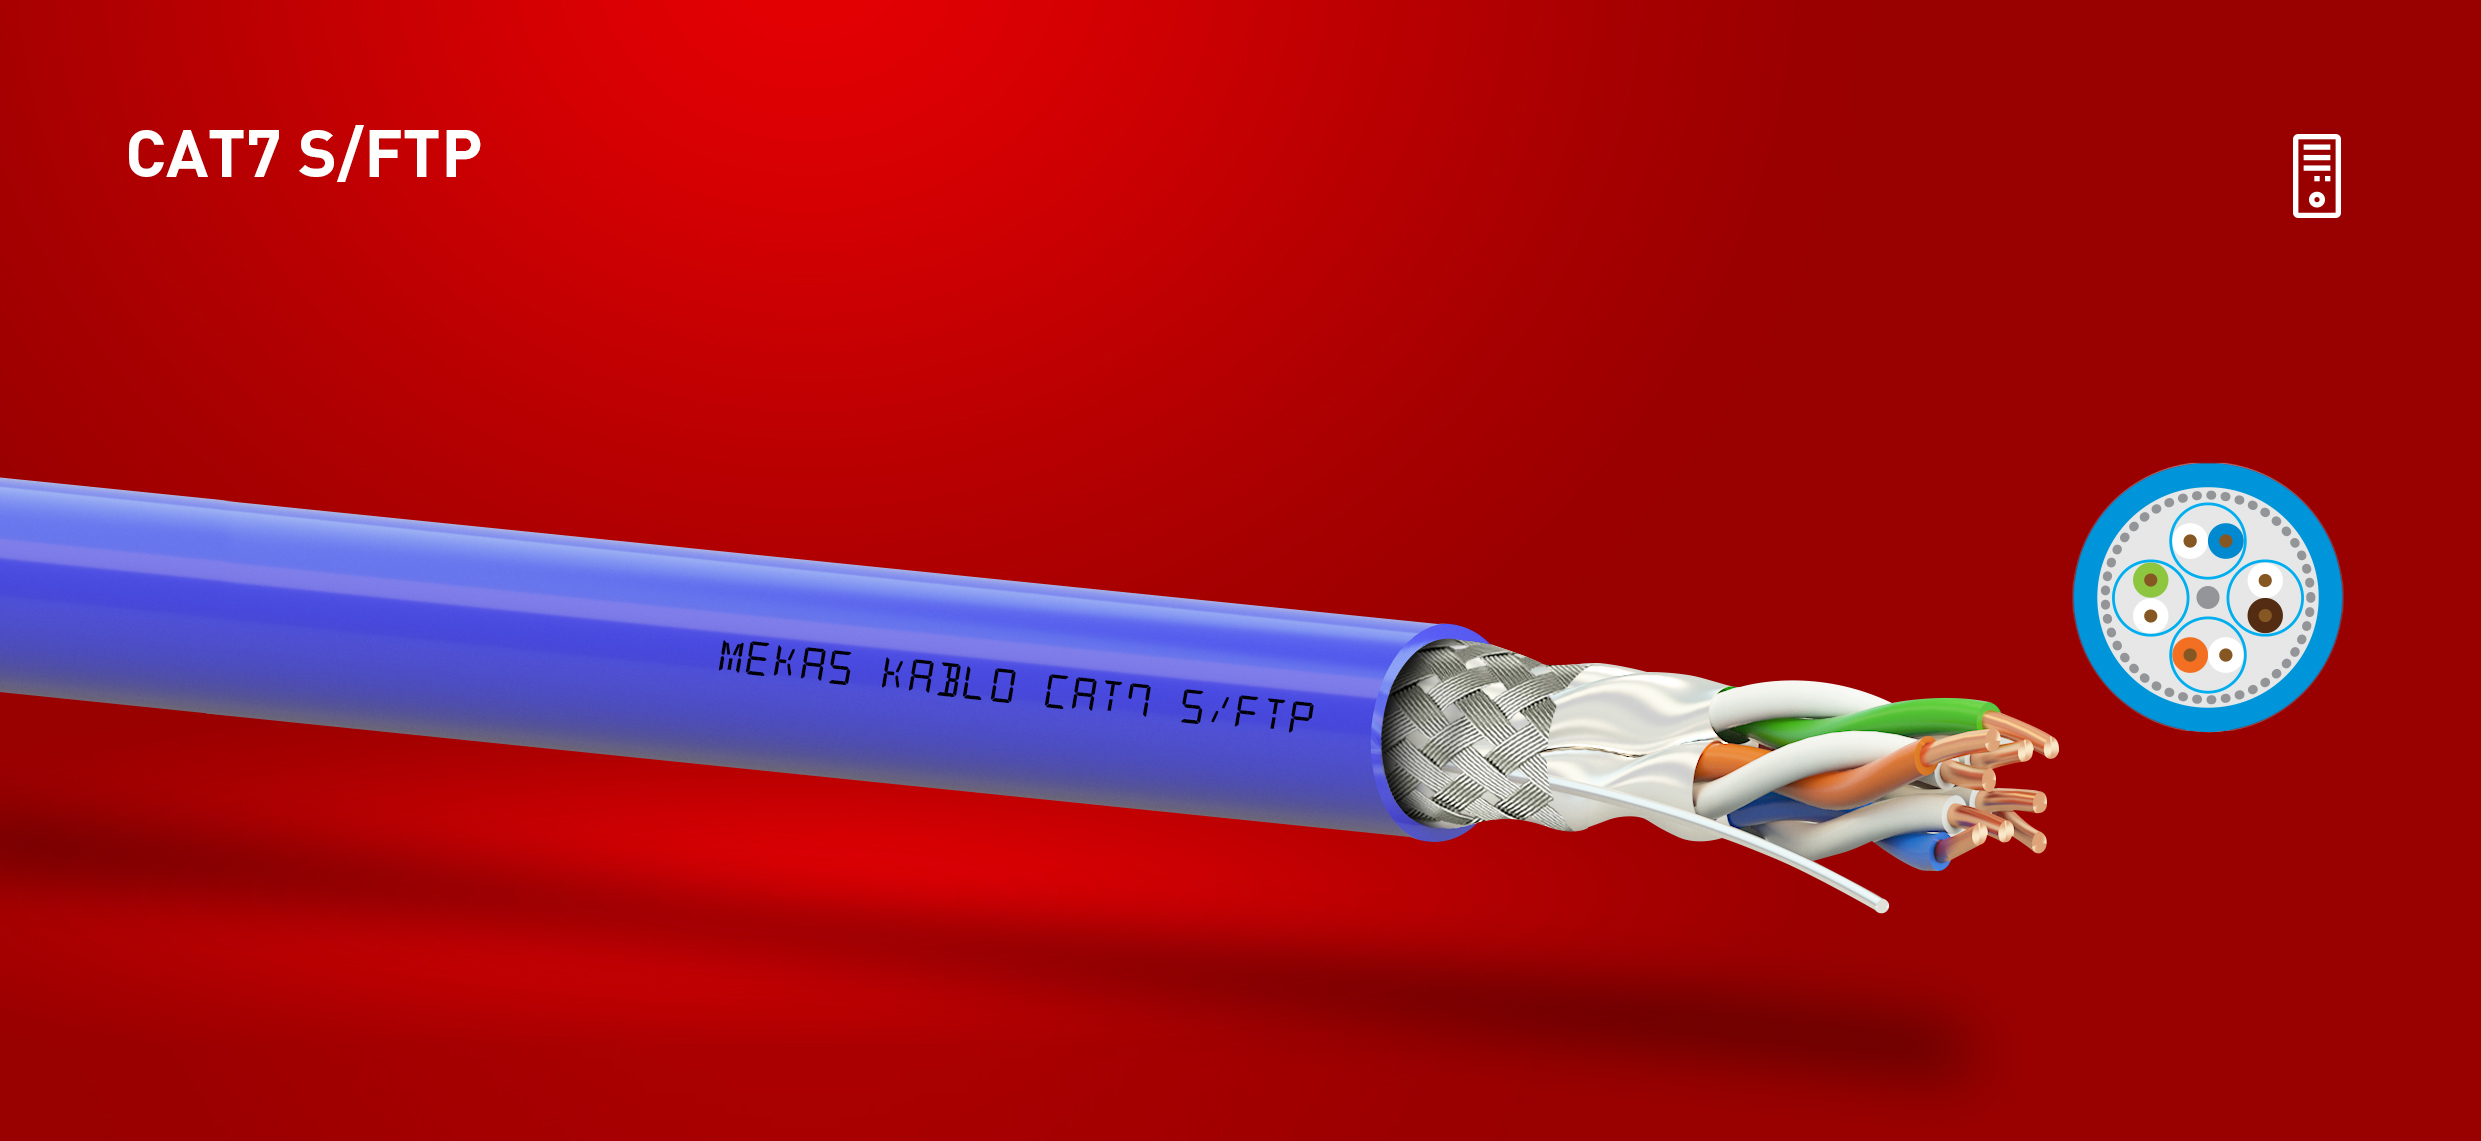 network kablo